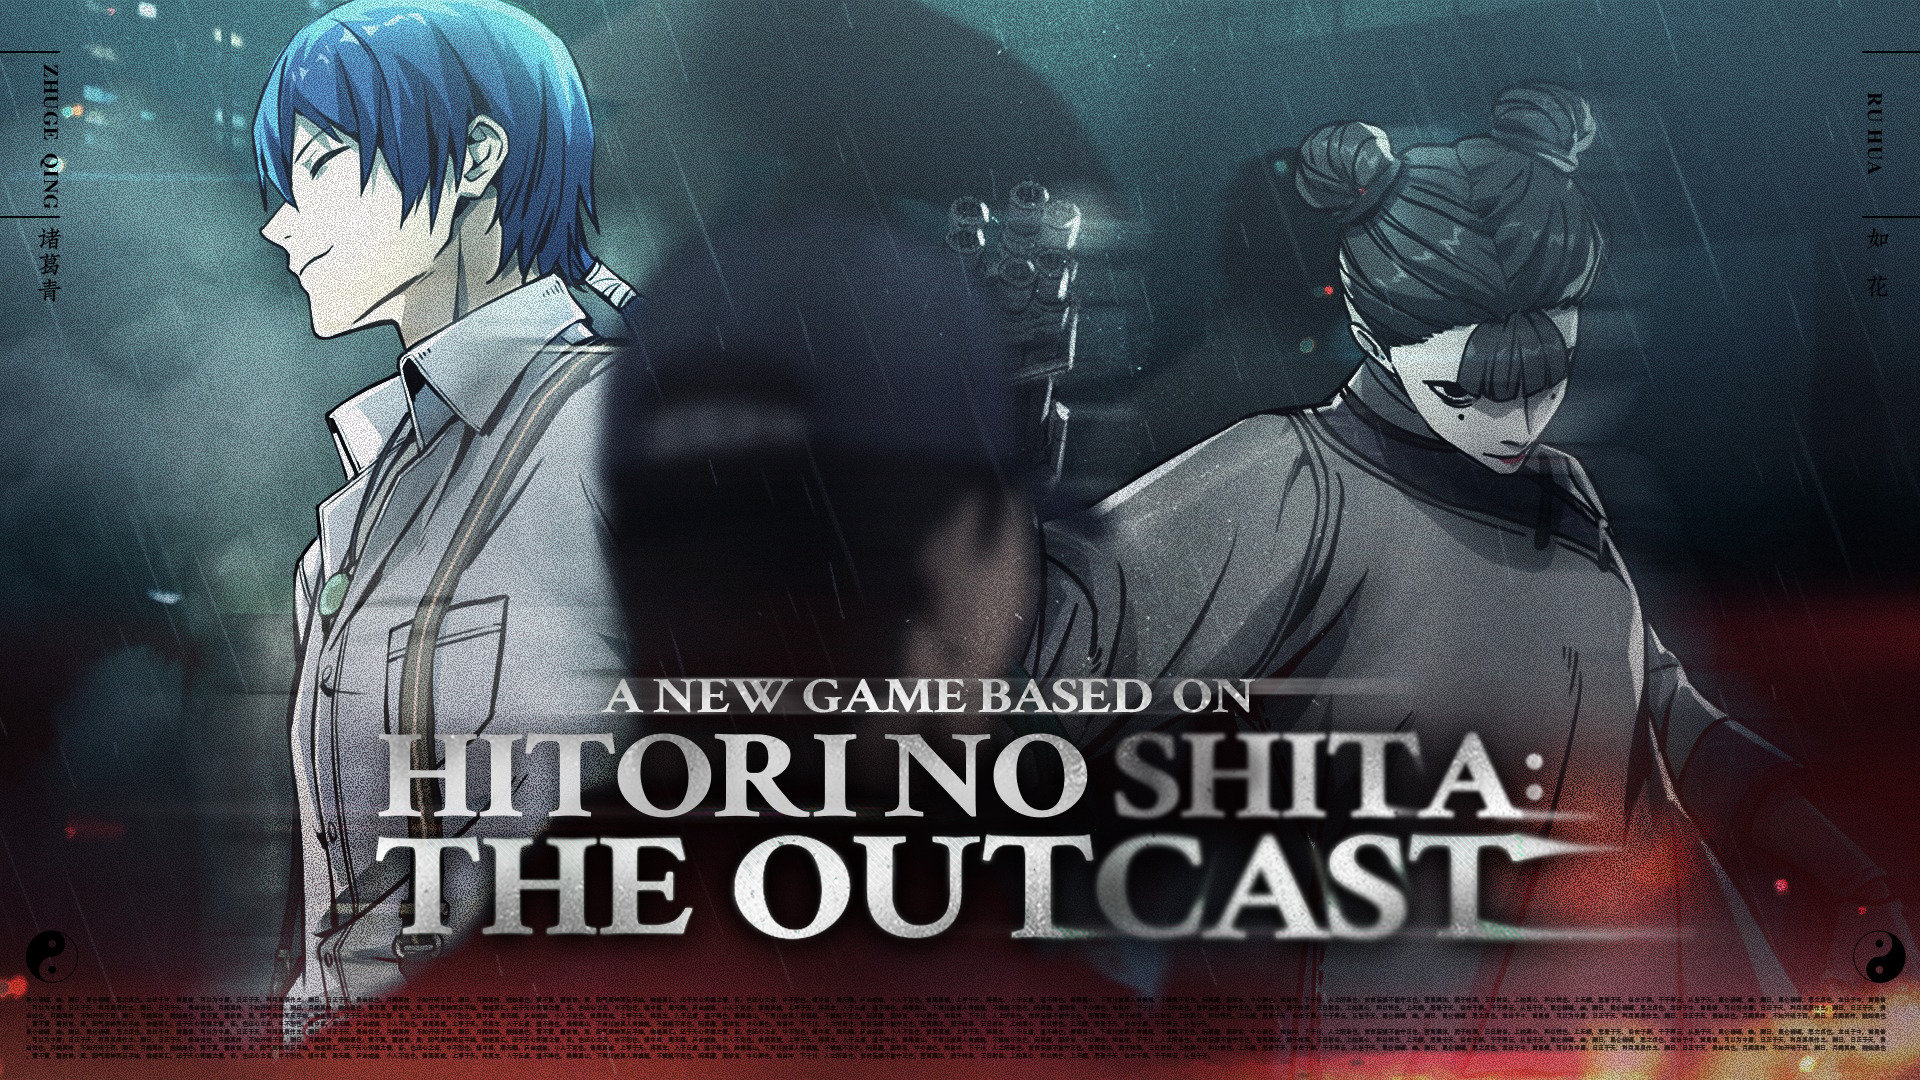 Hitori No Shita: The Outcast game announced for iOS, Android - Gematsu